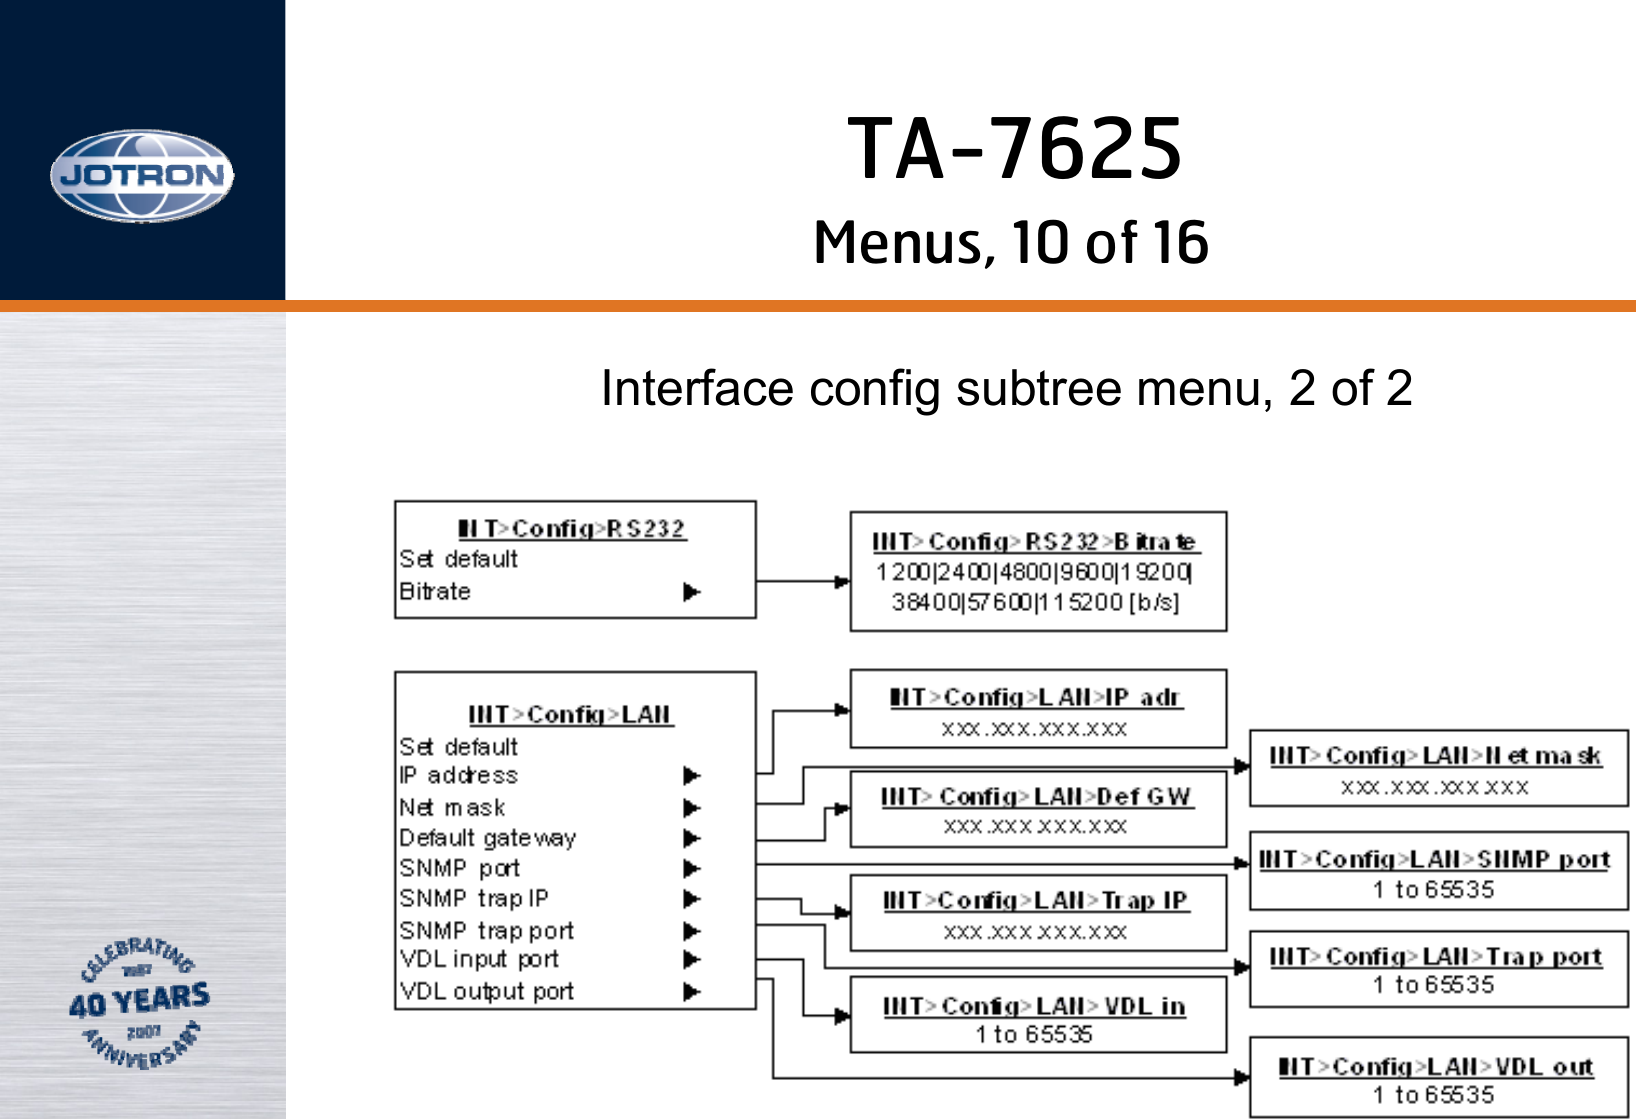 Menus, 10 of 16Interface config subtree menu, 2 of 2TA-7625